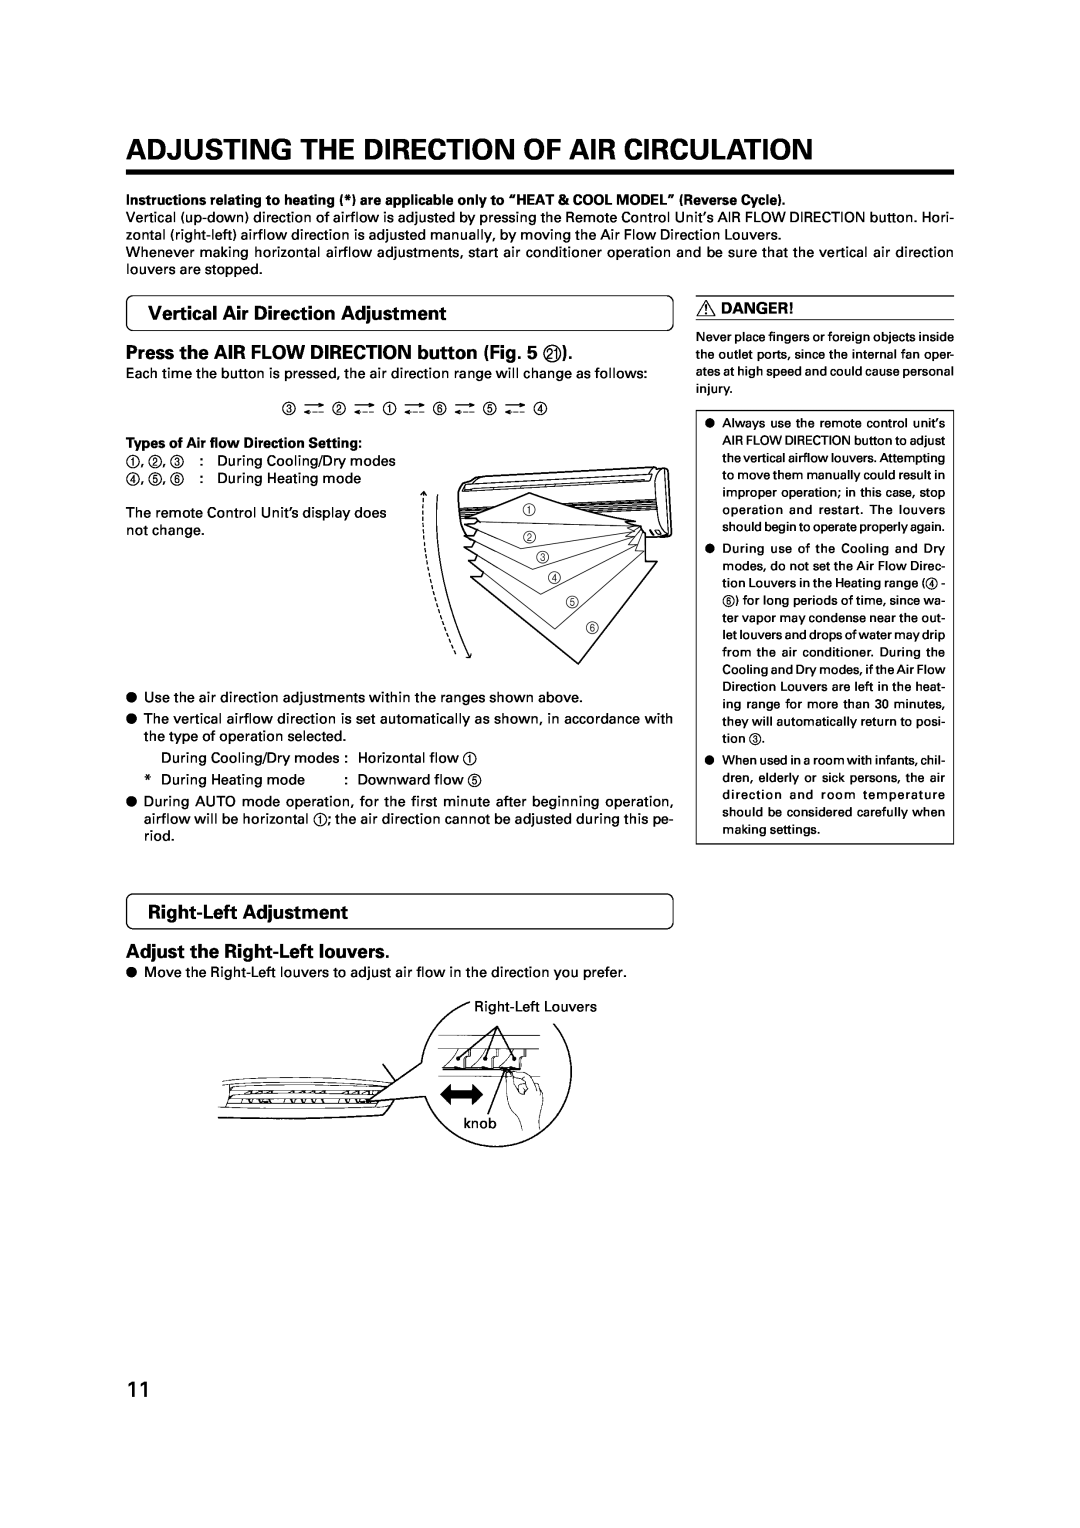 Fujitsu AST9, AST7, AST12 manual Adjusting The Direction Of Air Circulation, Vertical Air Direction Adjustment 